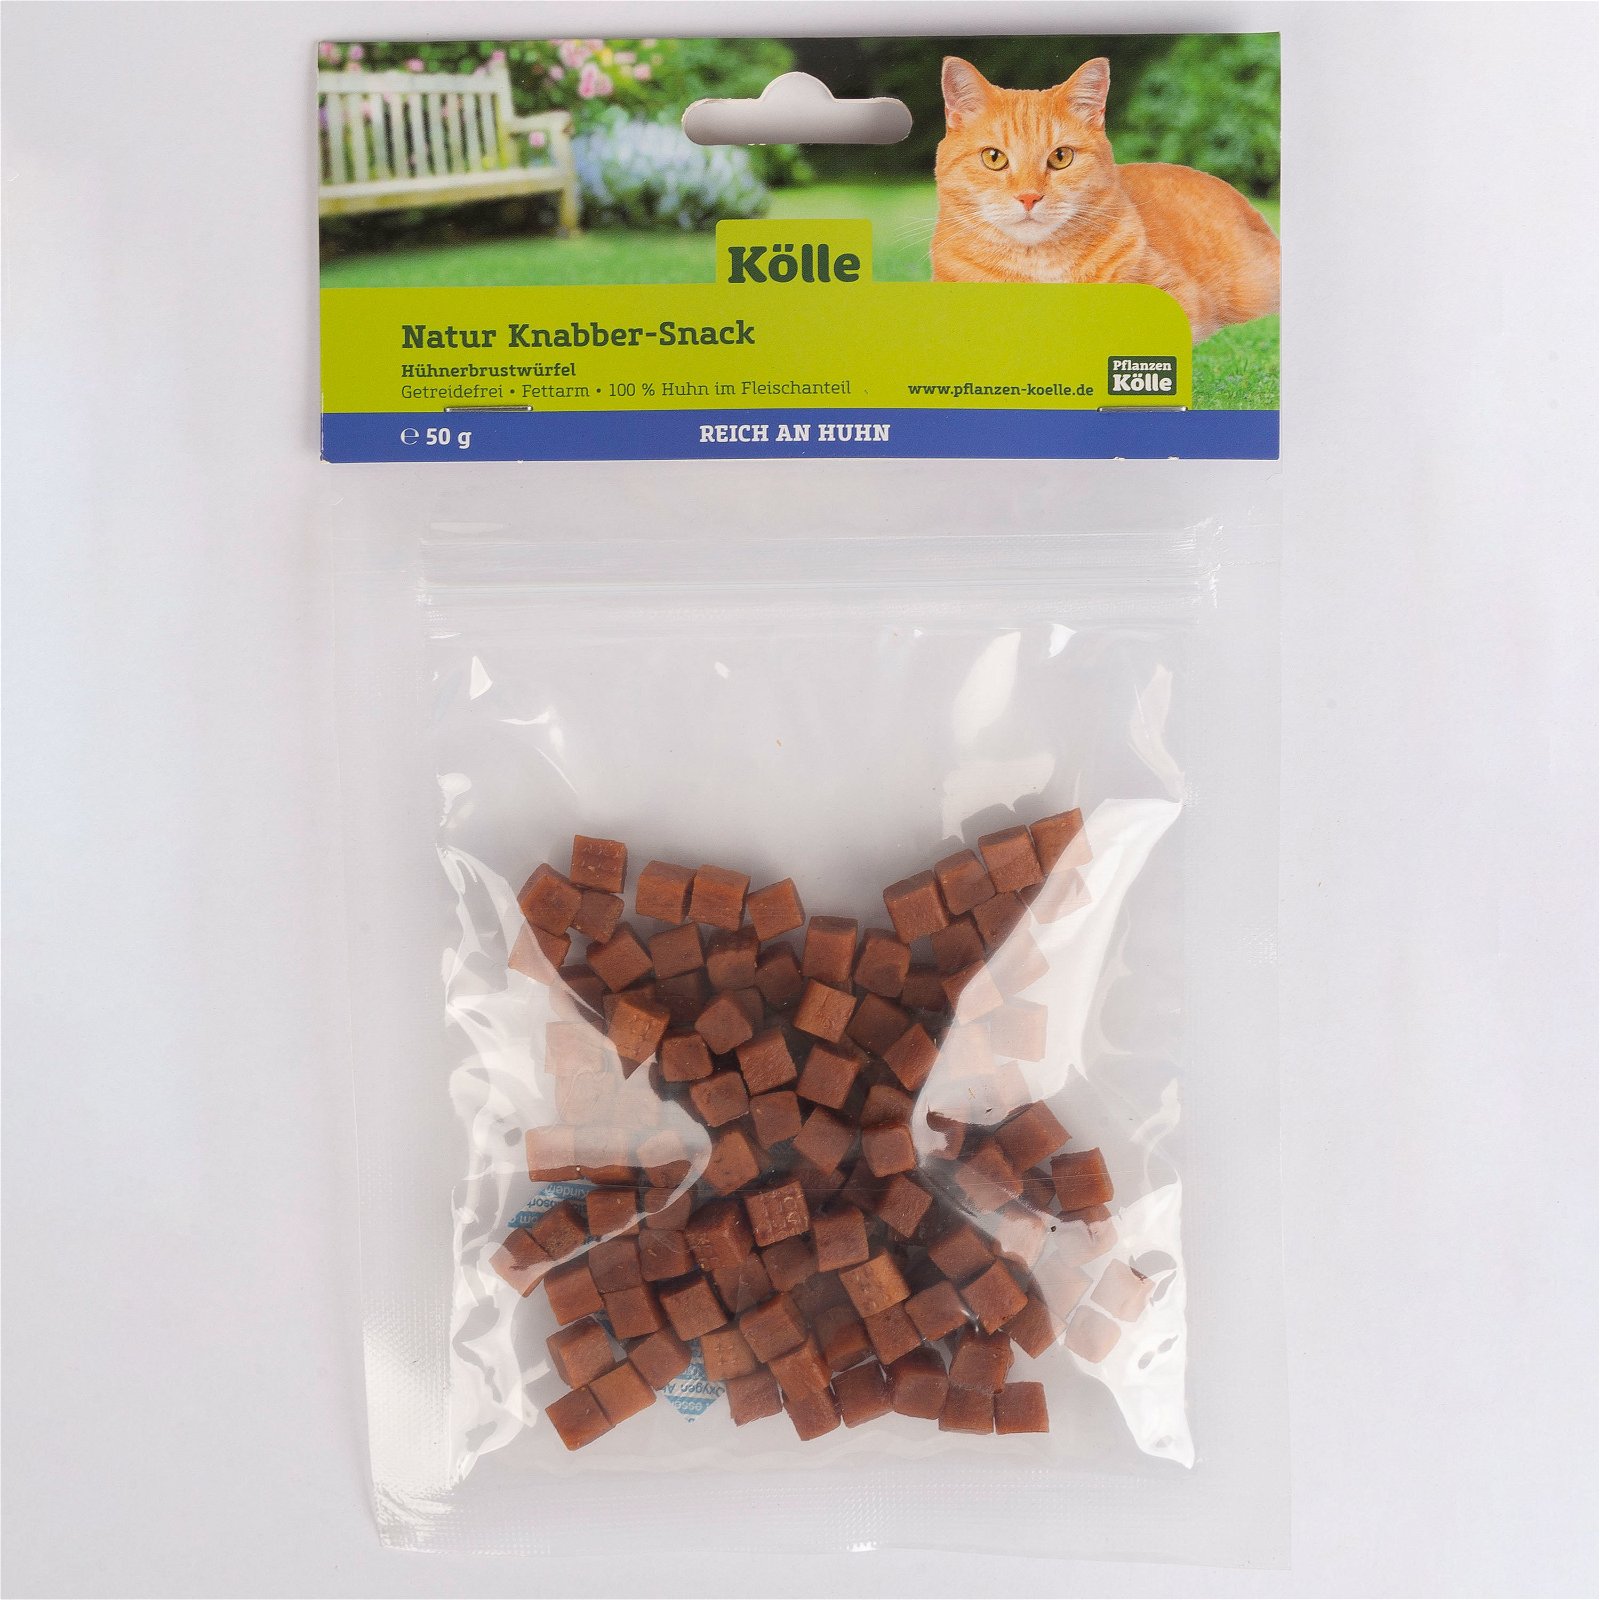 Natur Knabber-Snack für Katzen, Hühnerbrustwürfel, 50 g